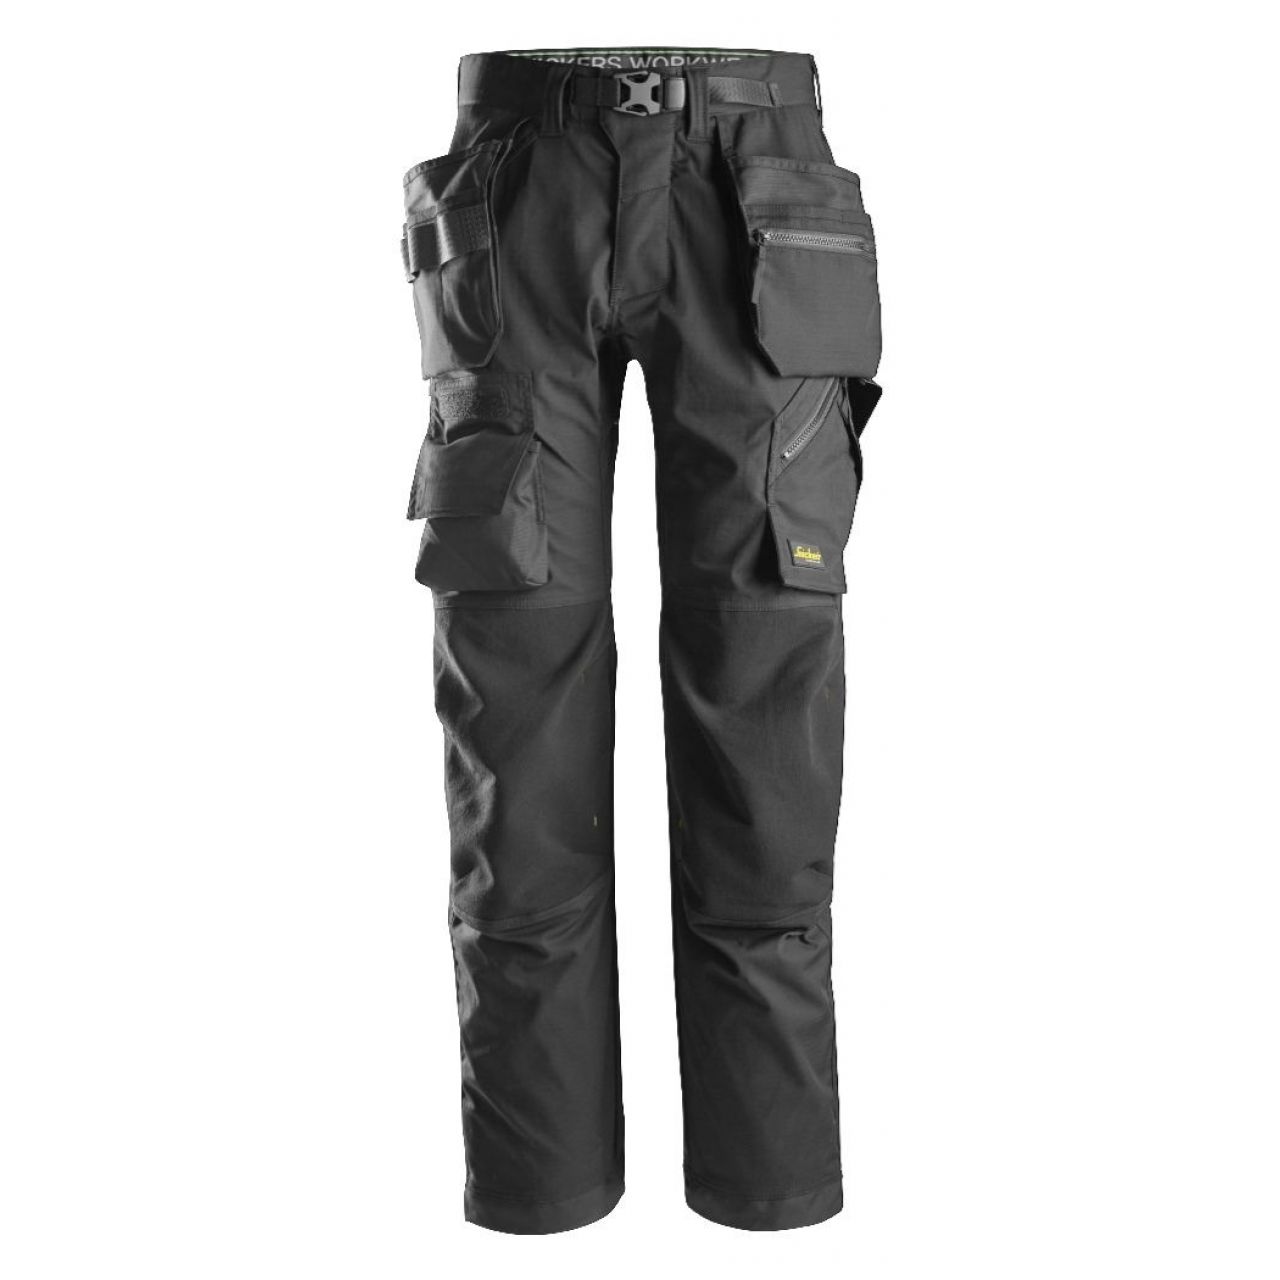 Pantalon solador FlexiWork+ bolsillos flotantes negro talla 052